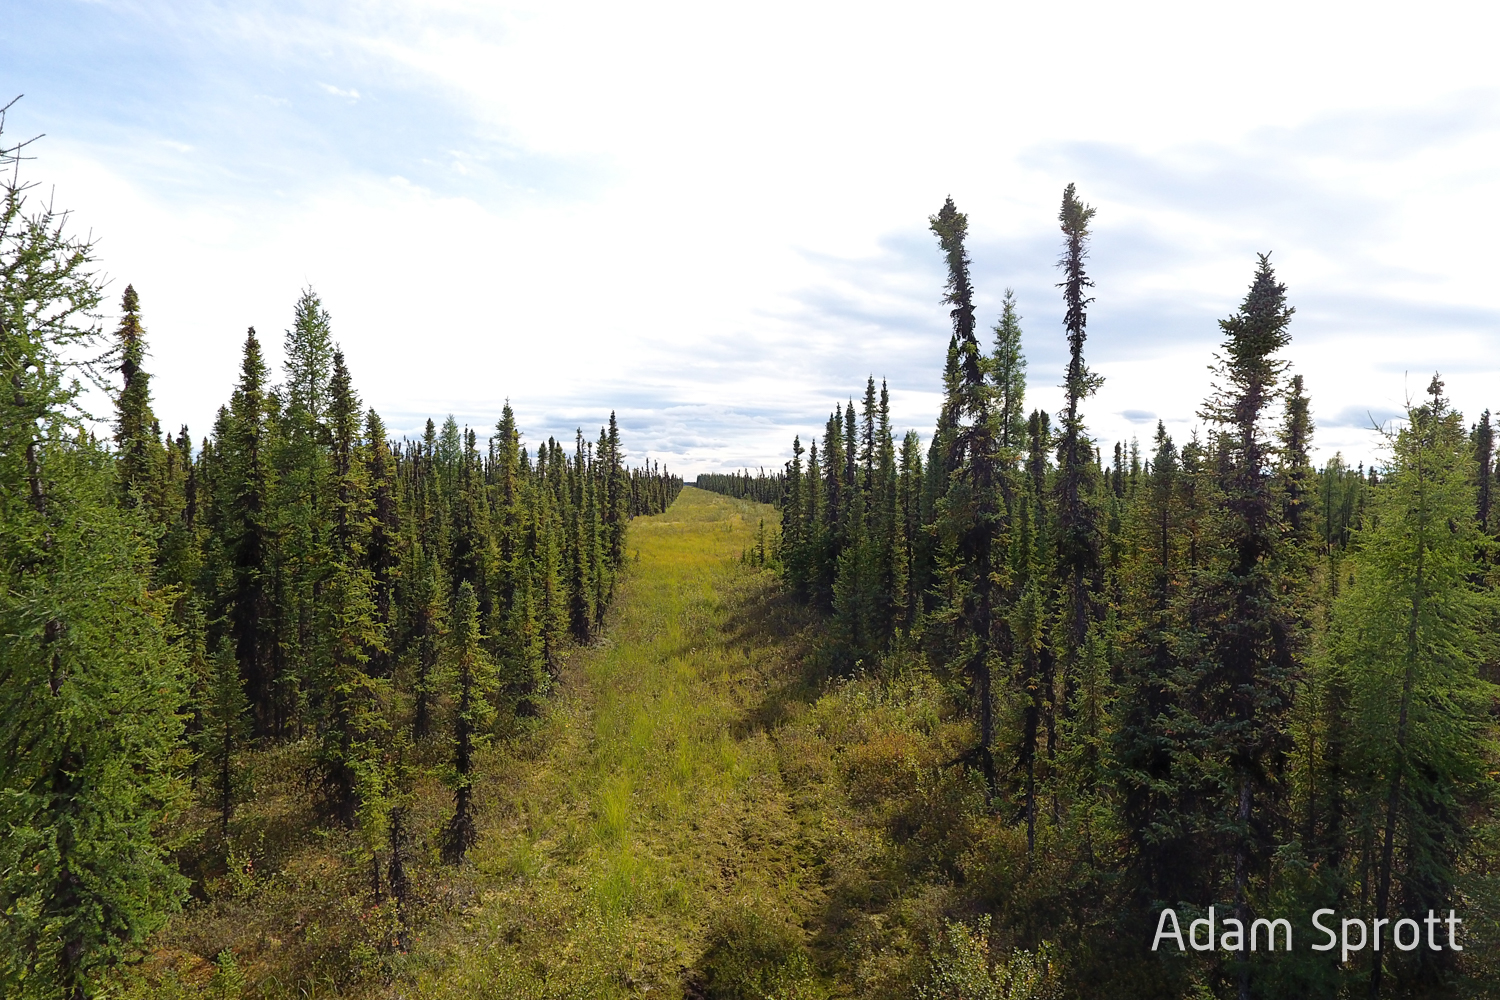 Divergent patterns of understory forage growth after seismic line exploration: Implications for caribou habitat restoration